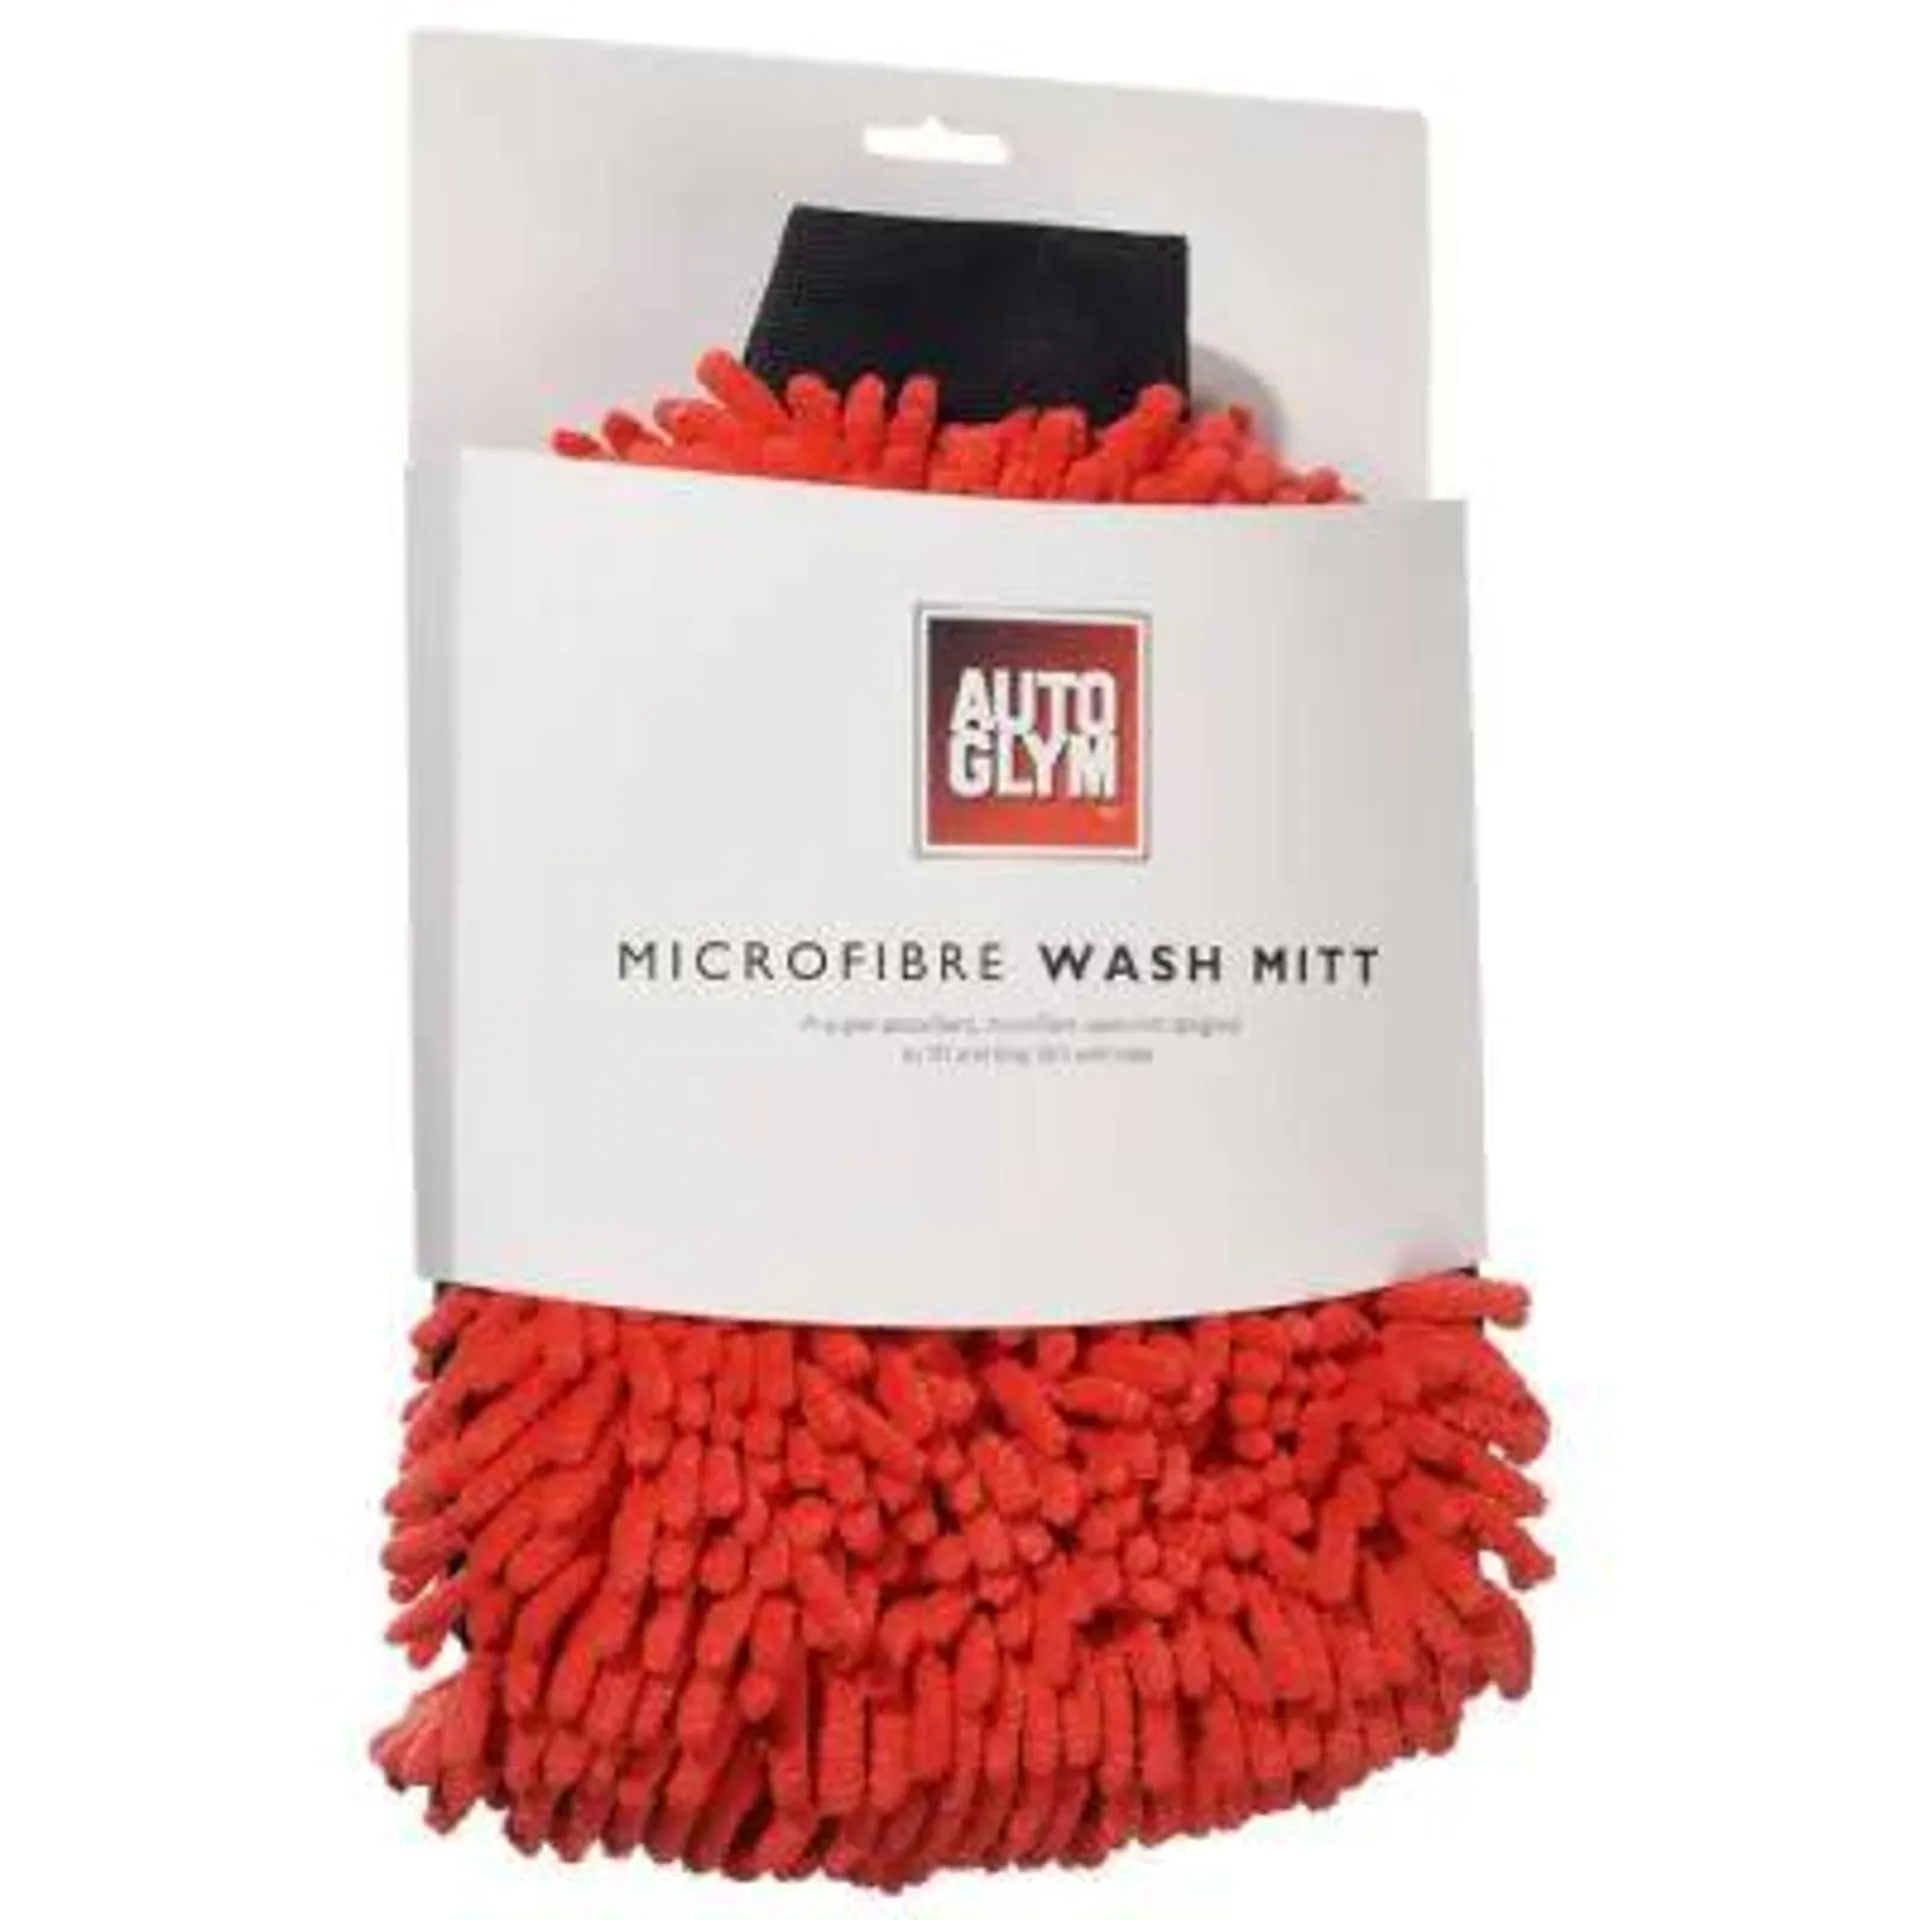 autoglym microfibre wash mitt